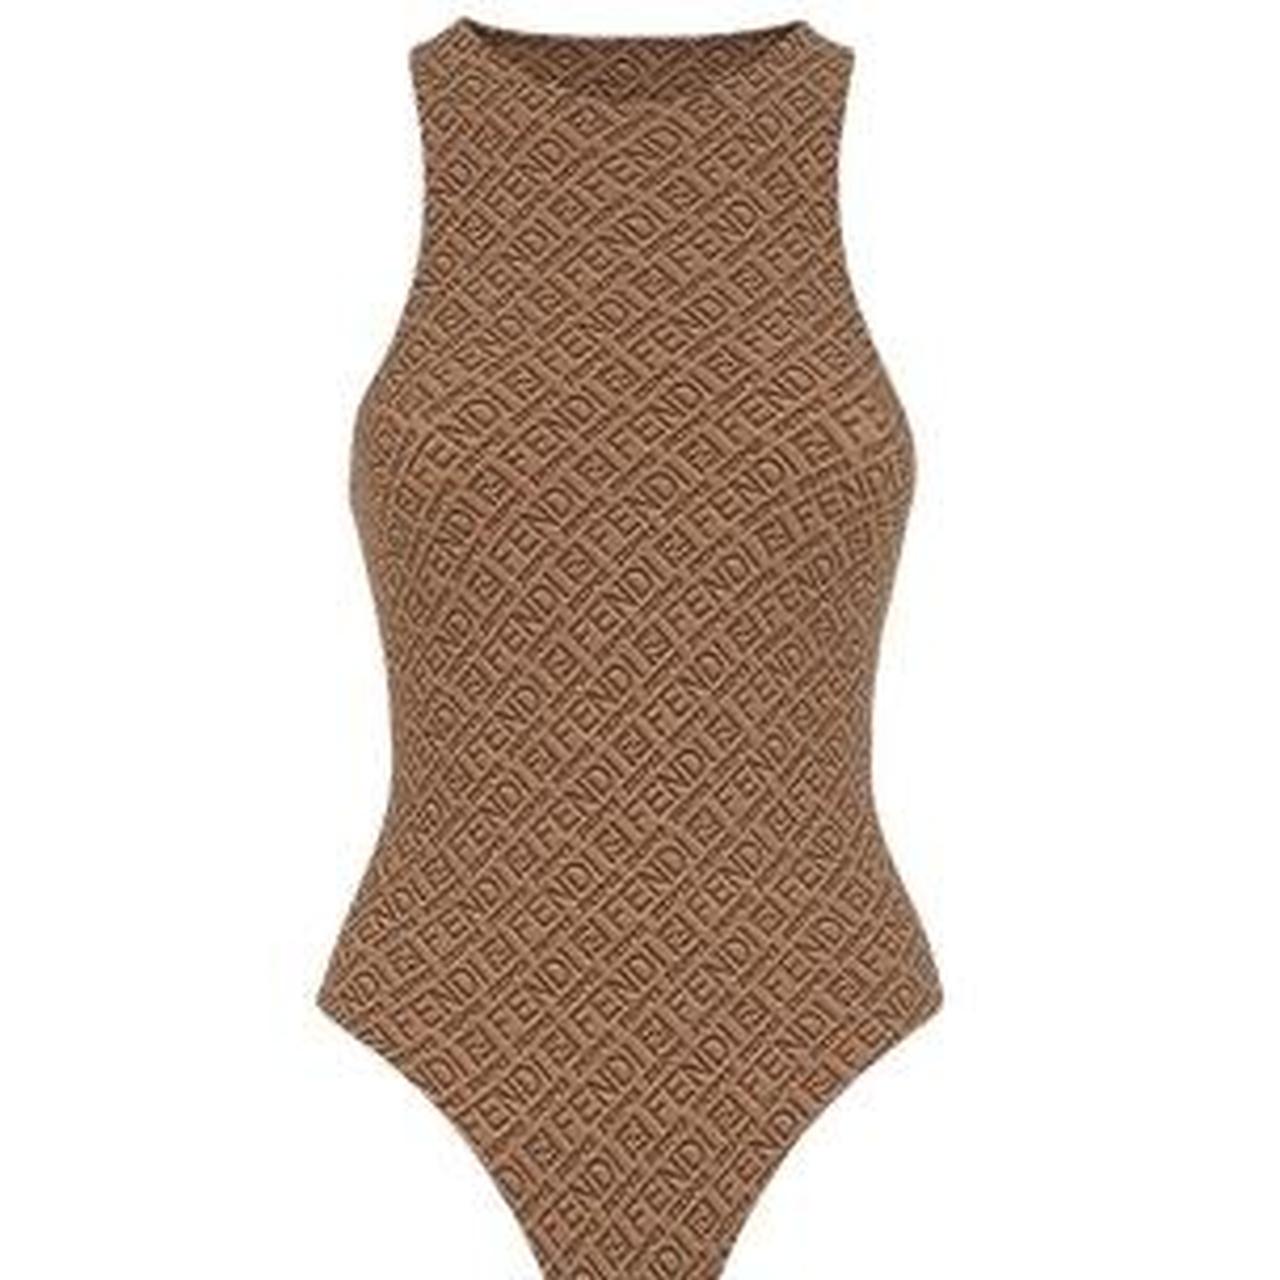 Fendi Women's Tan and Brown Bodysuit